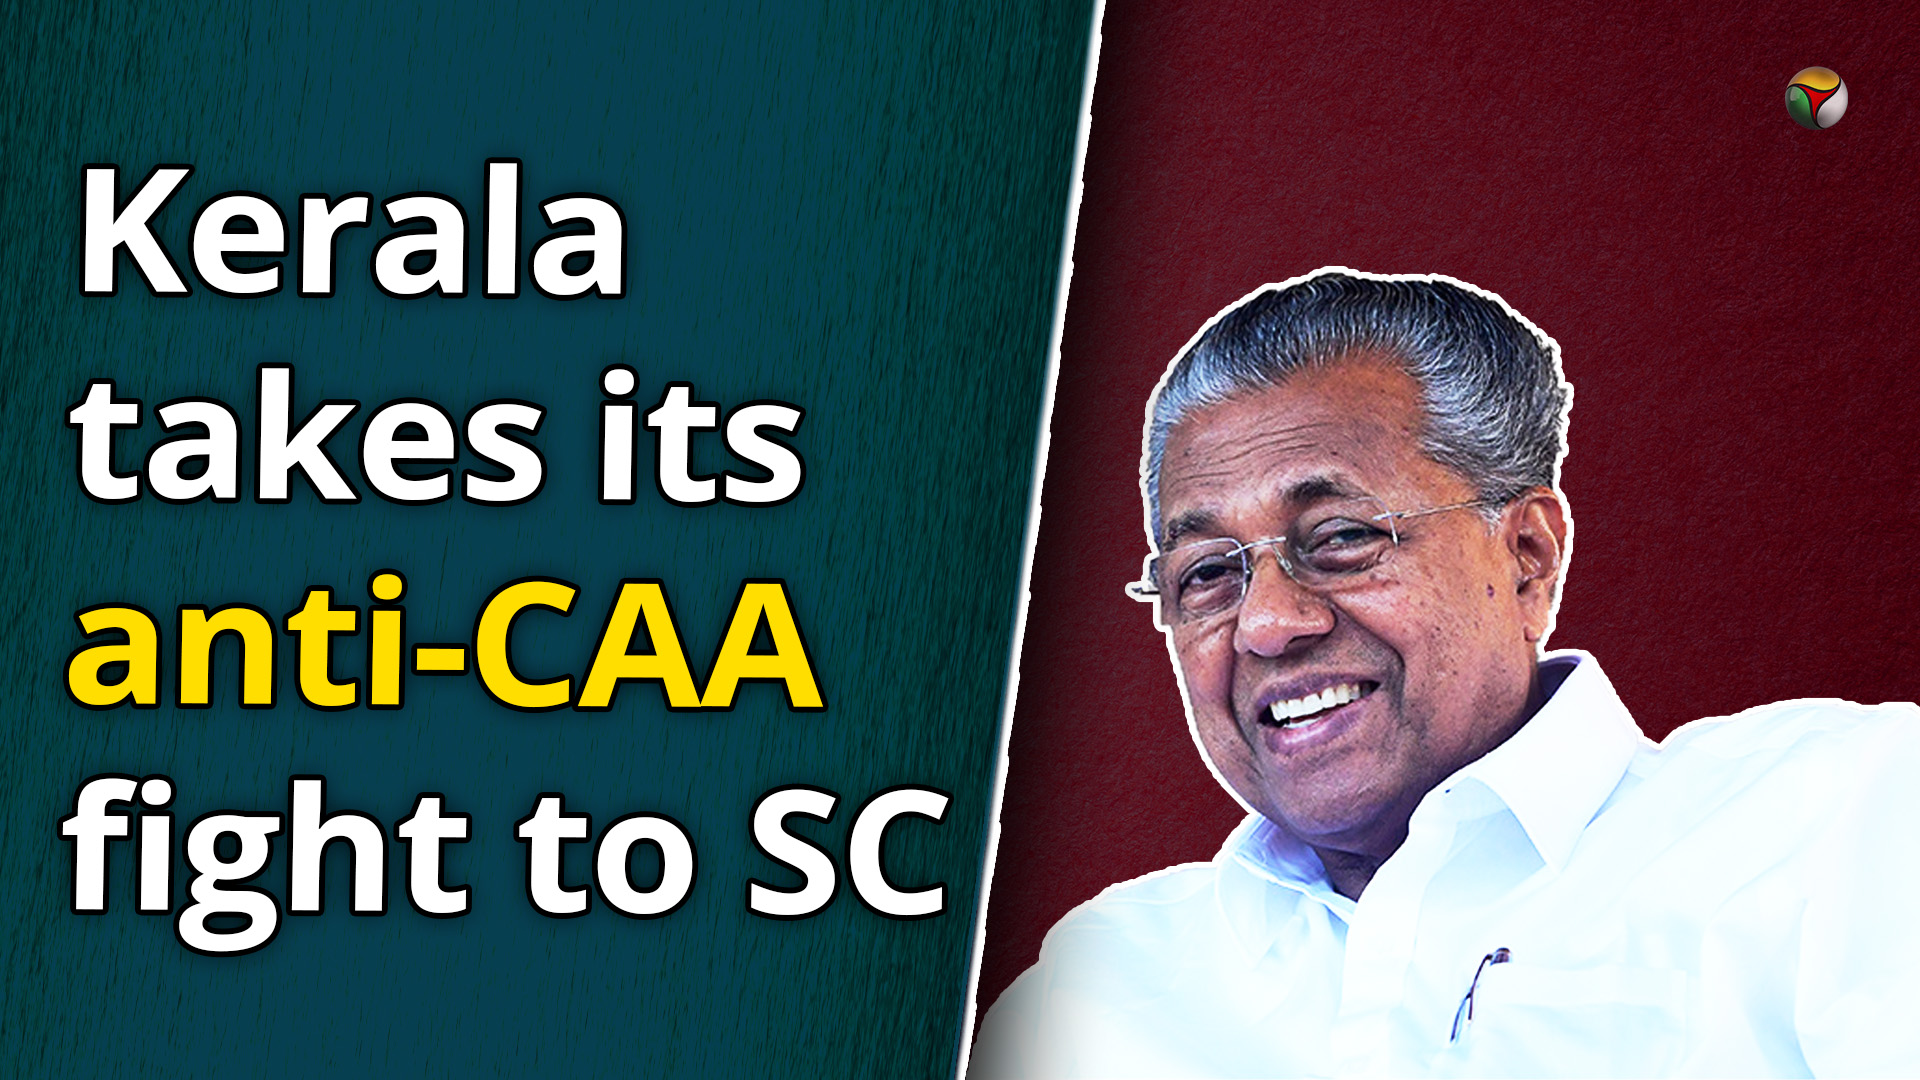 Kerala takes its anti-CAA fight to SC